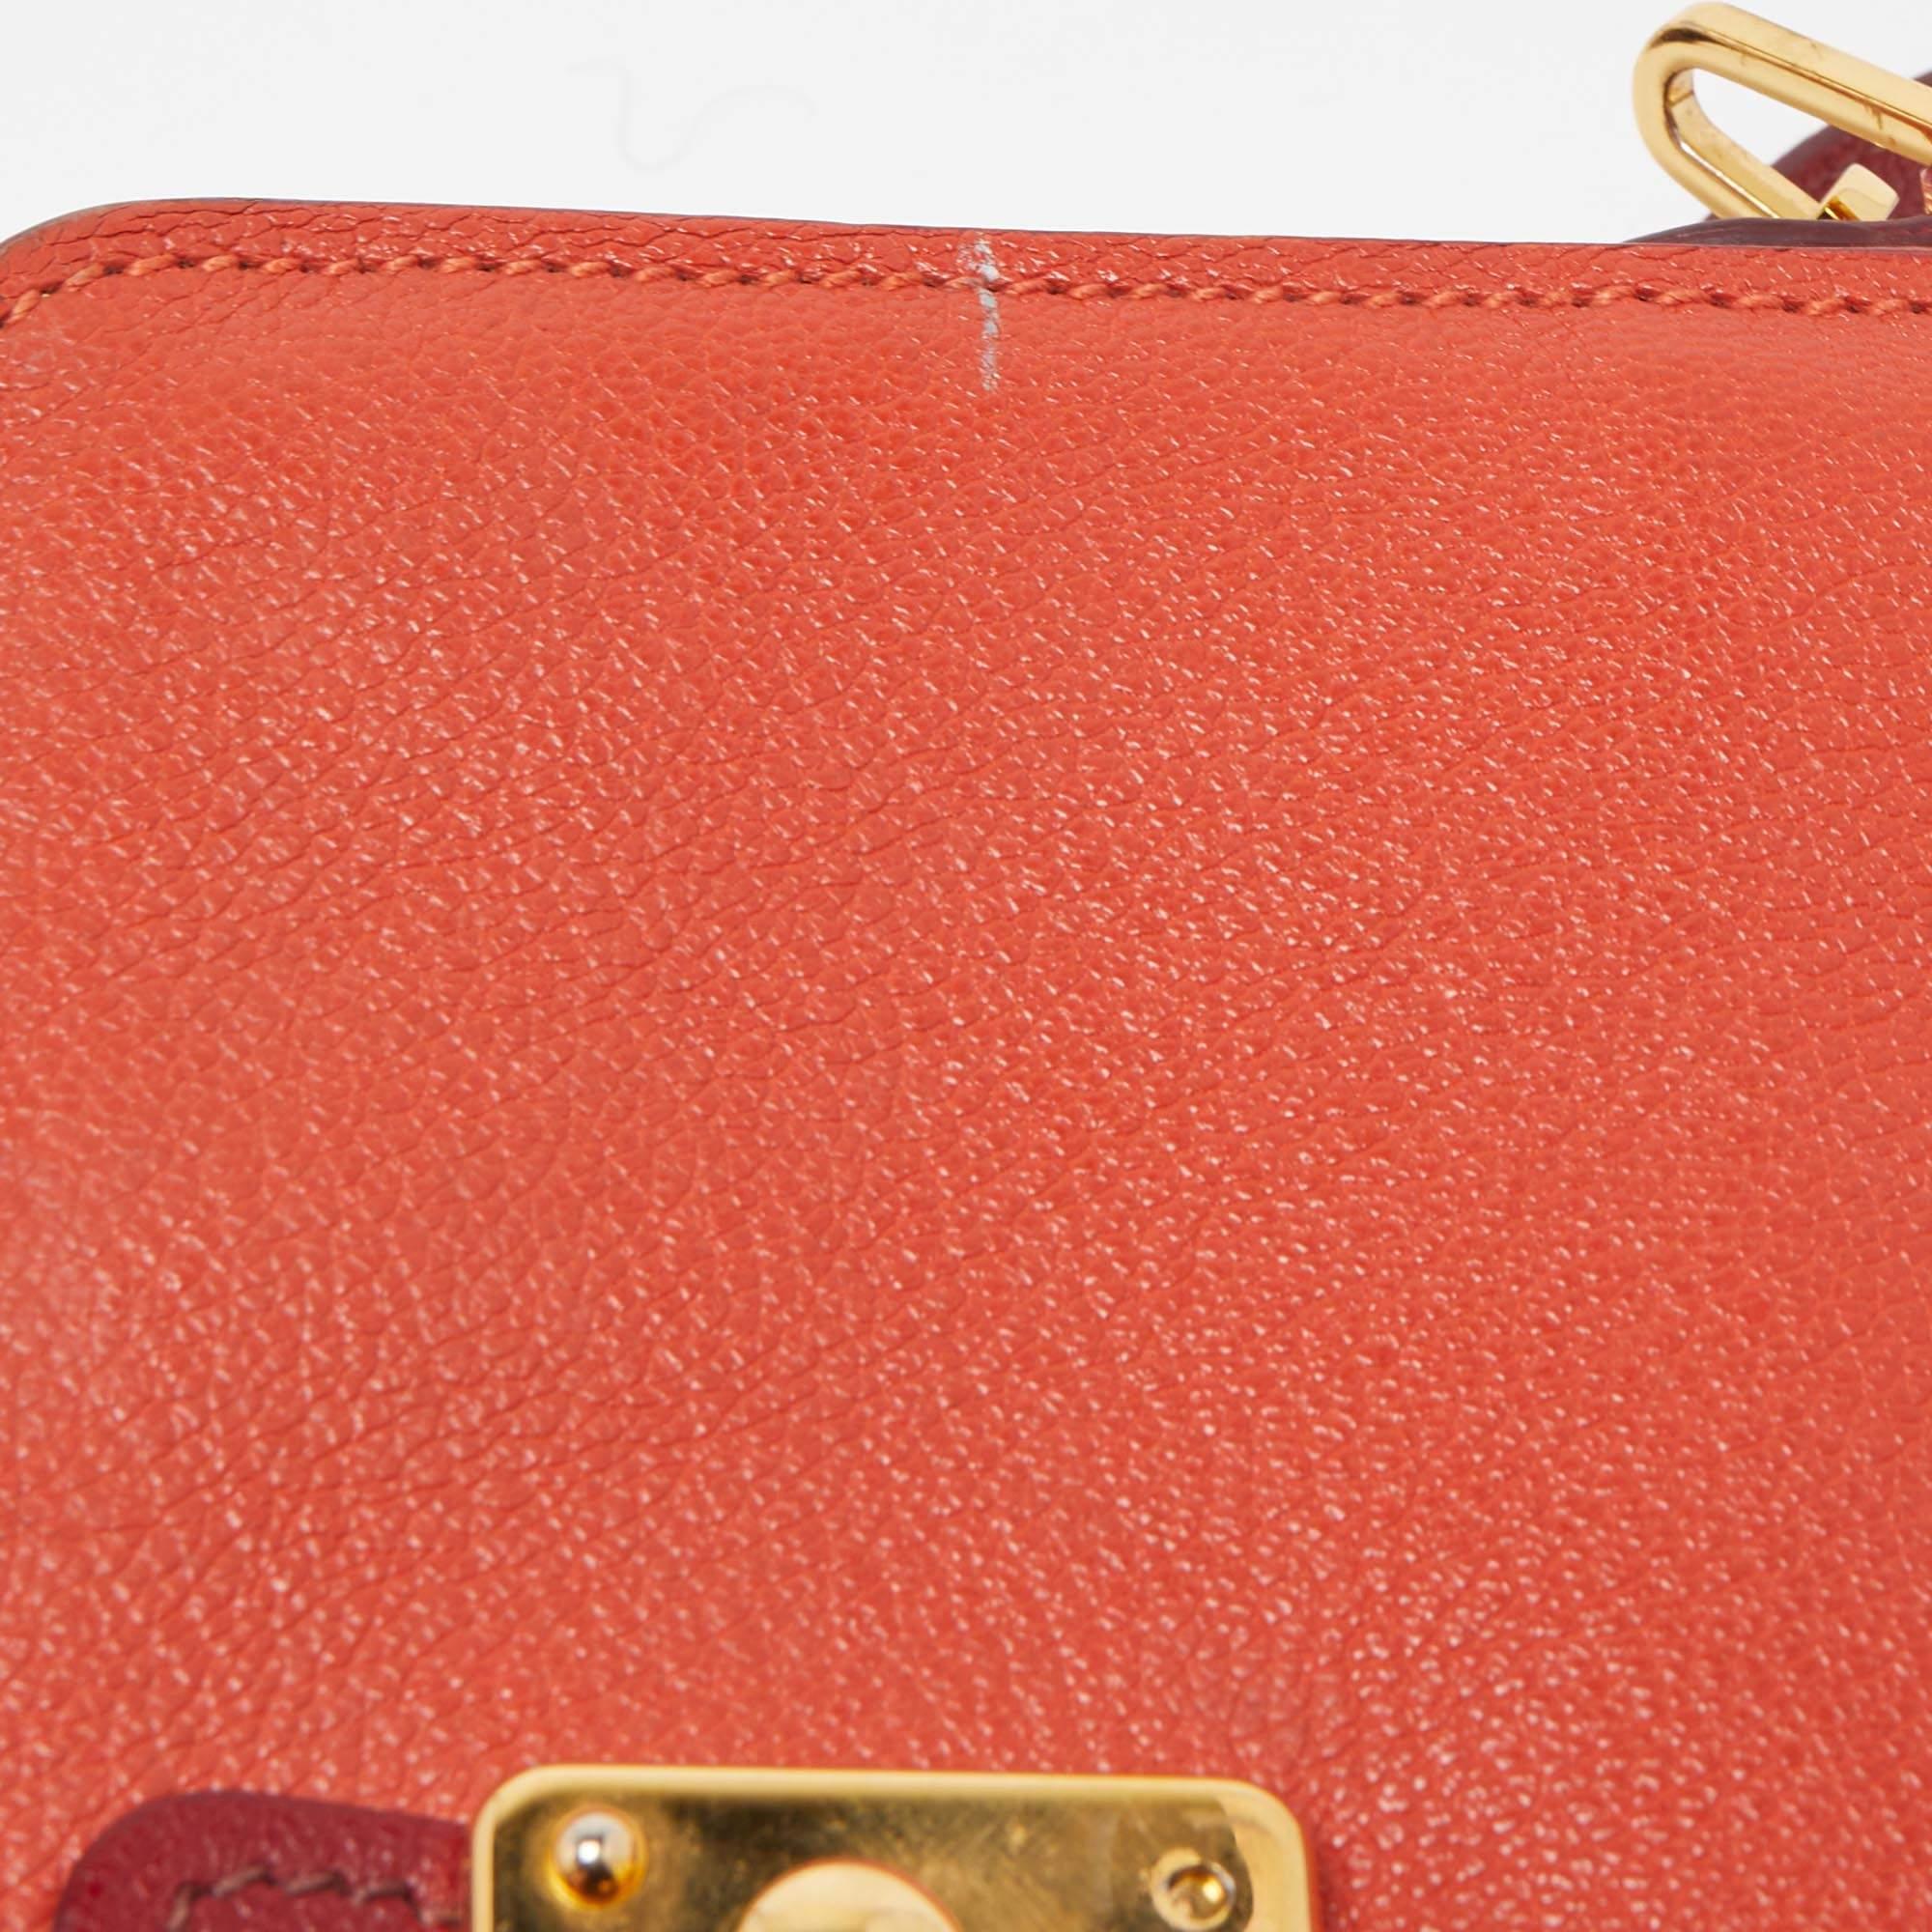 Miu Miu Orange/Red Madras Leather Pushlock Flap Chain Shoulder Bag 4